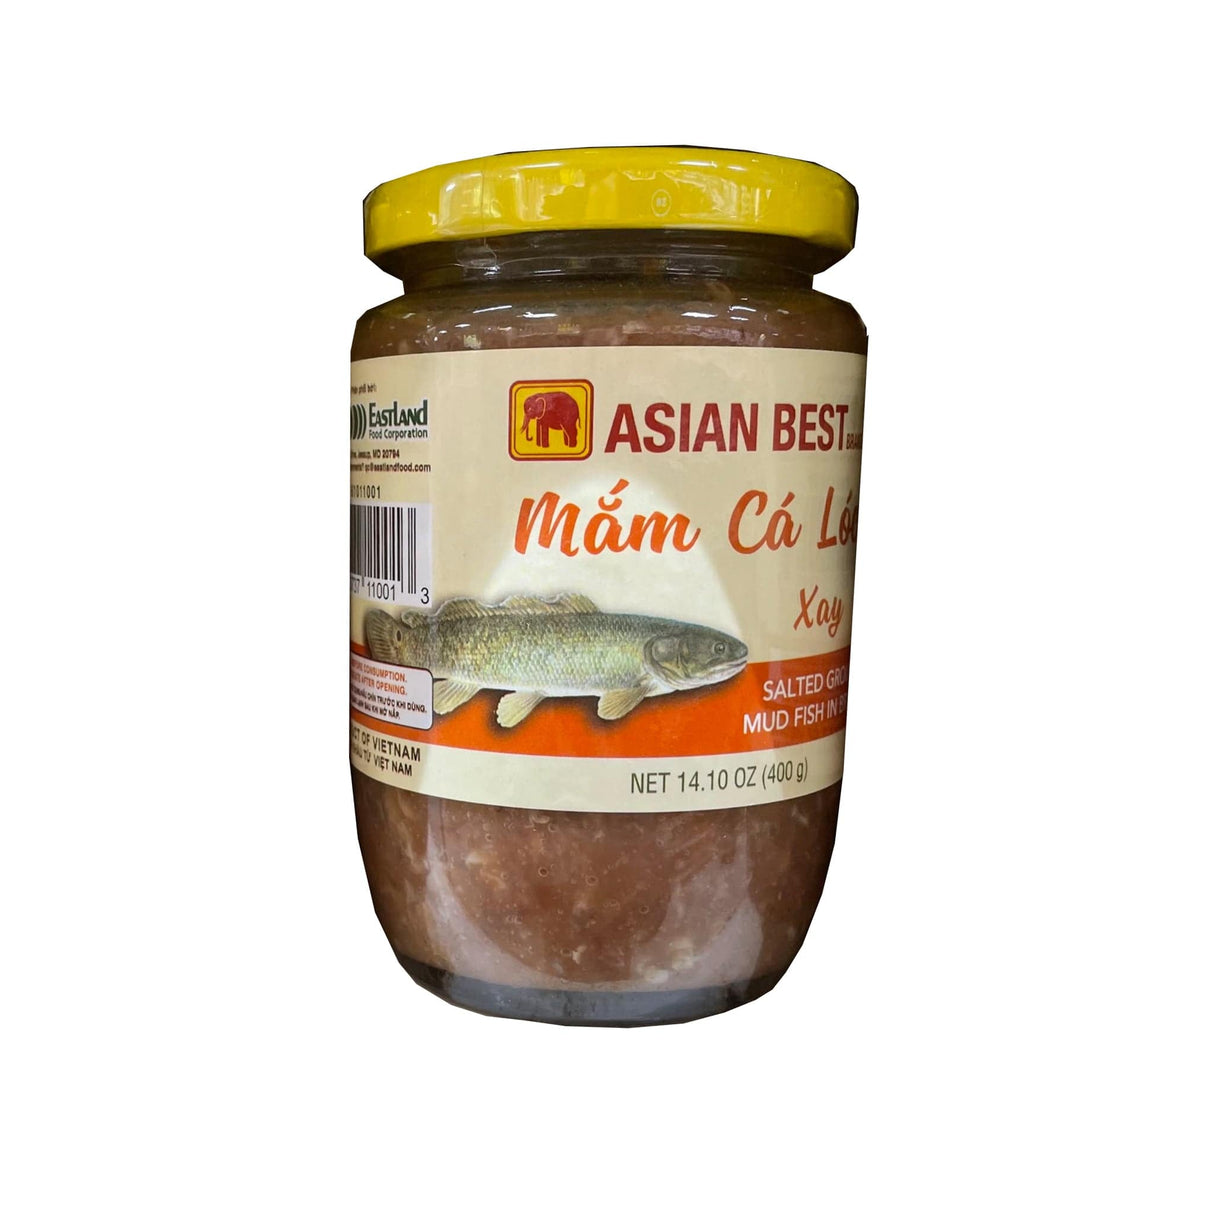 Asian Best Brand Salted Ground Mud Fish in Brine (Mam Ca Loc Xay)